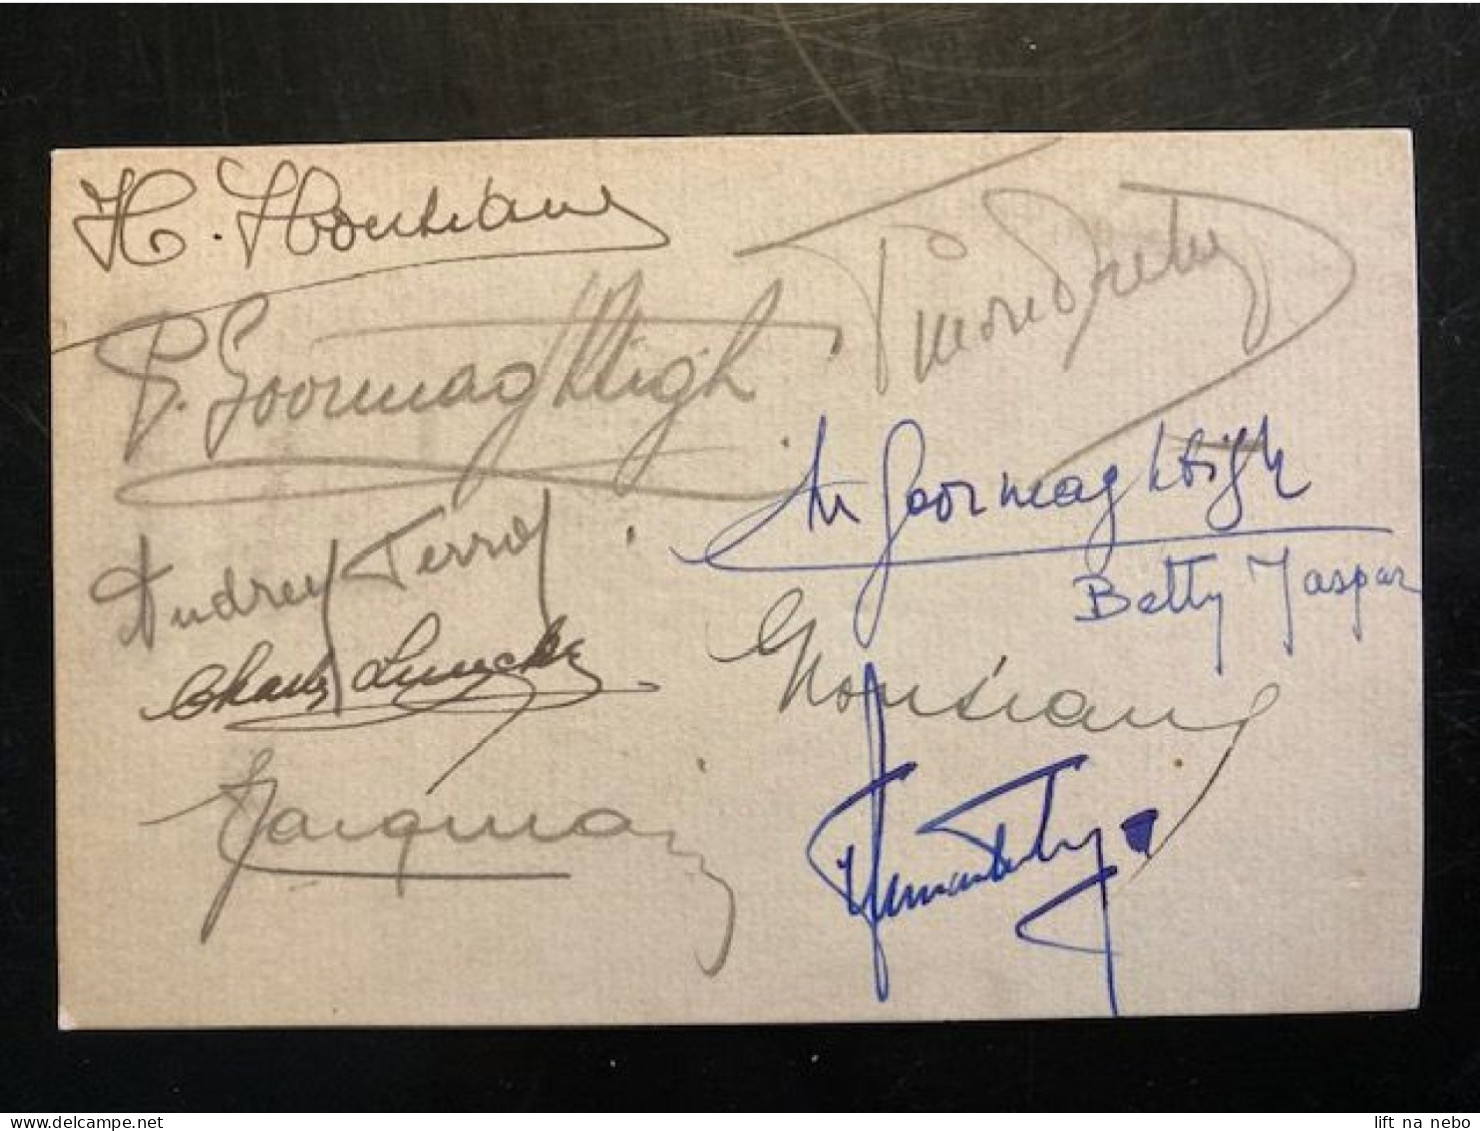 Tract Presse Clandestine Résistance Belge WWII WW2 'Xmas 1941 Menu' Signatures Au Dos - Dokumente